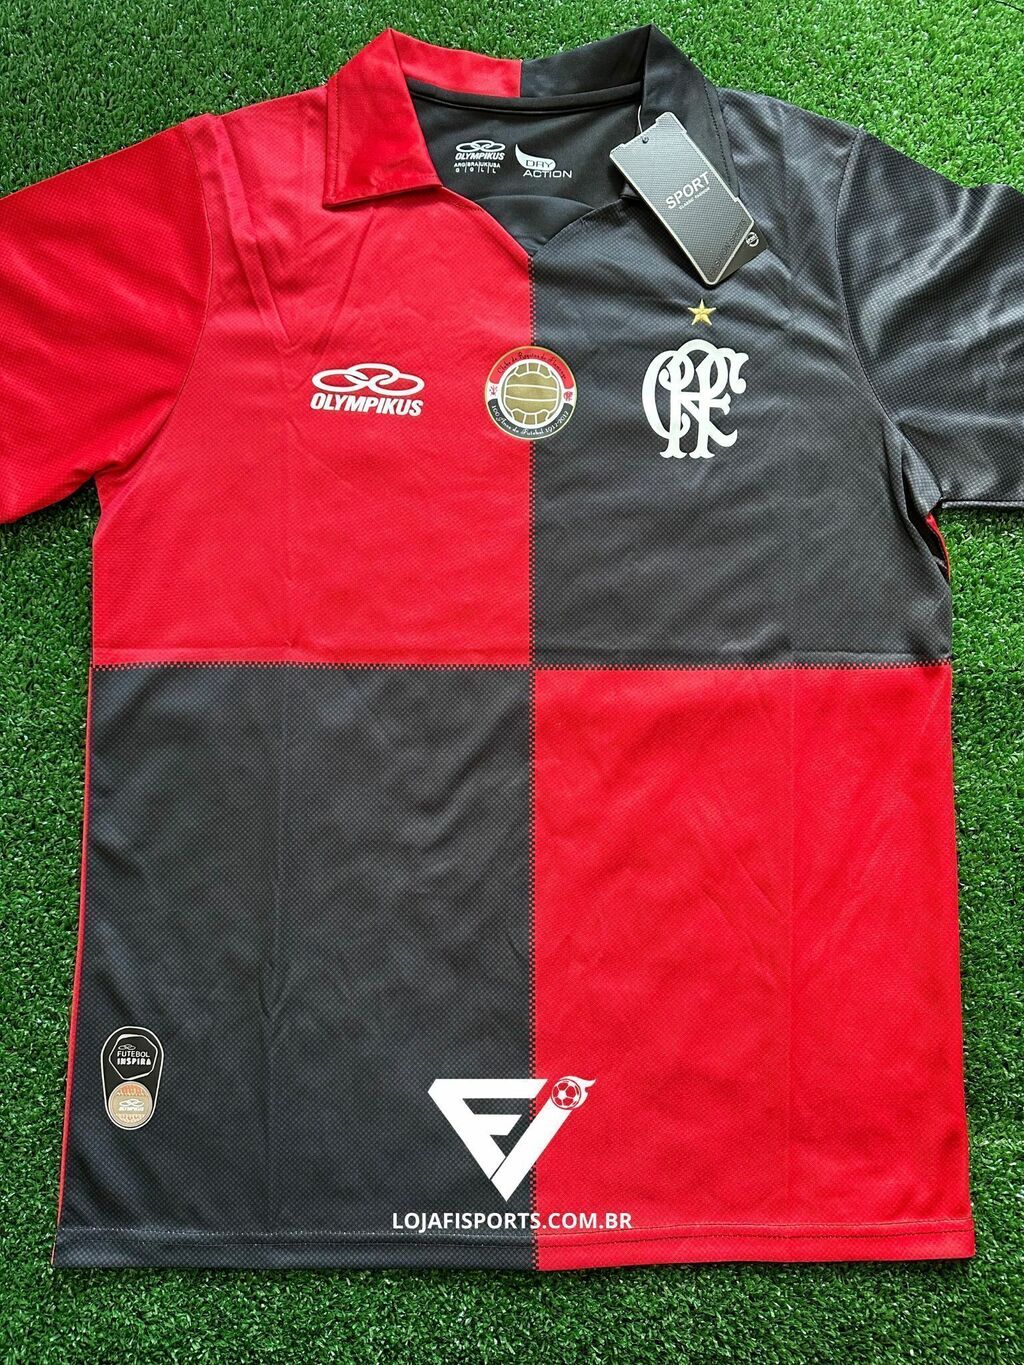 Camisa Retrô Flamengo III 2012 Papagaio-Vintém - Torcedor Olympikus